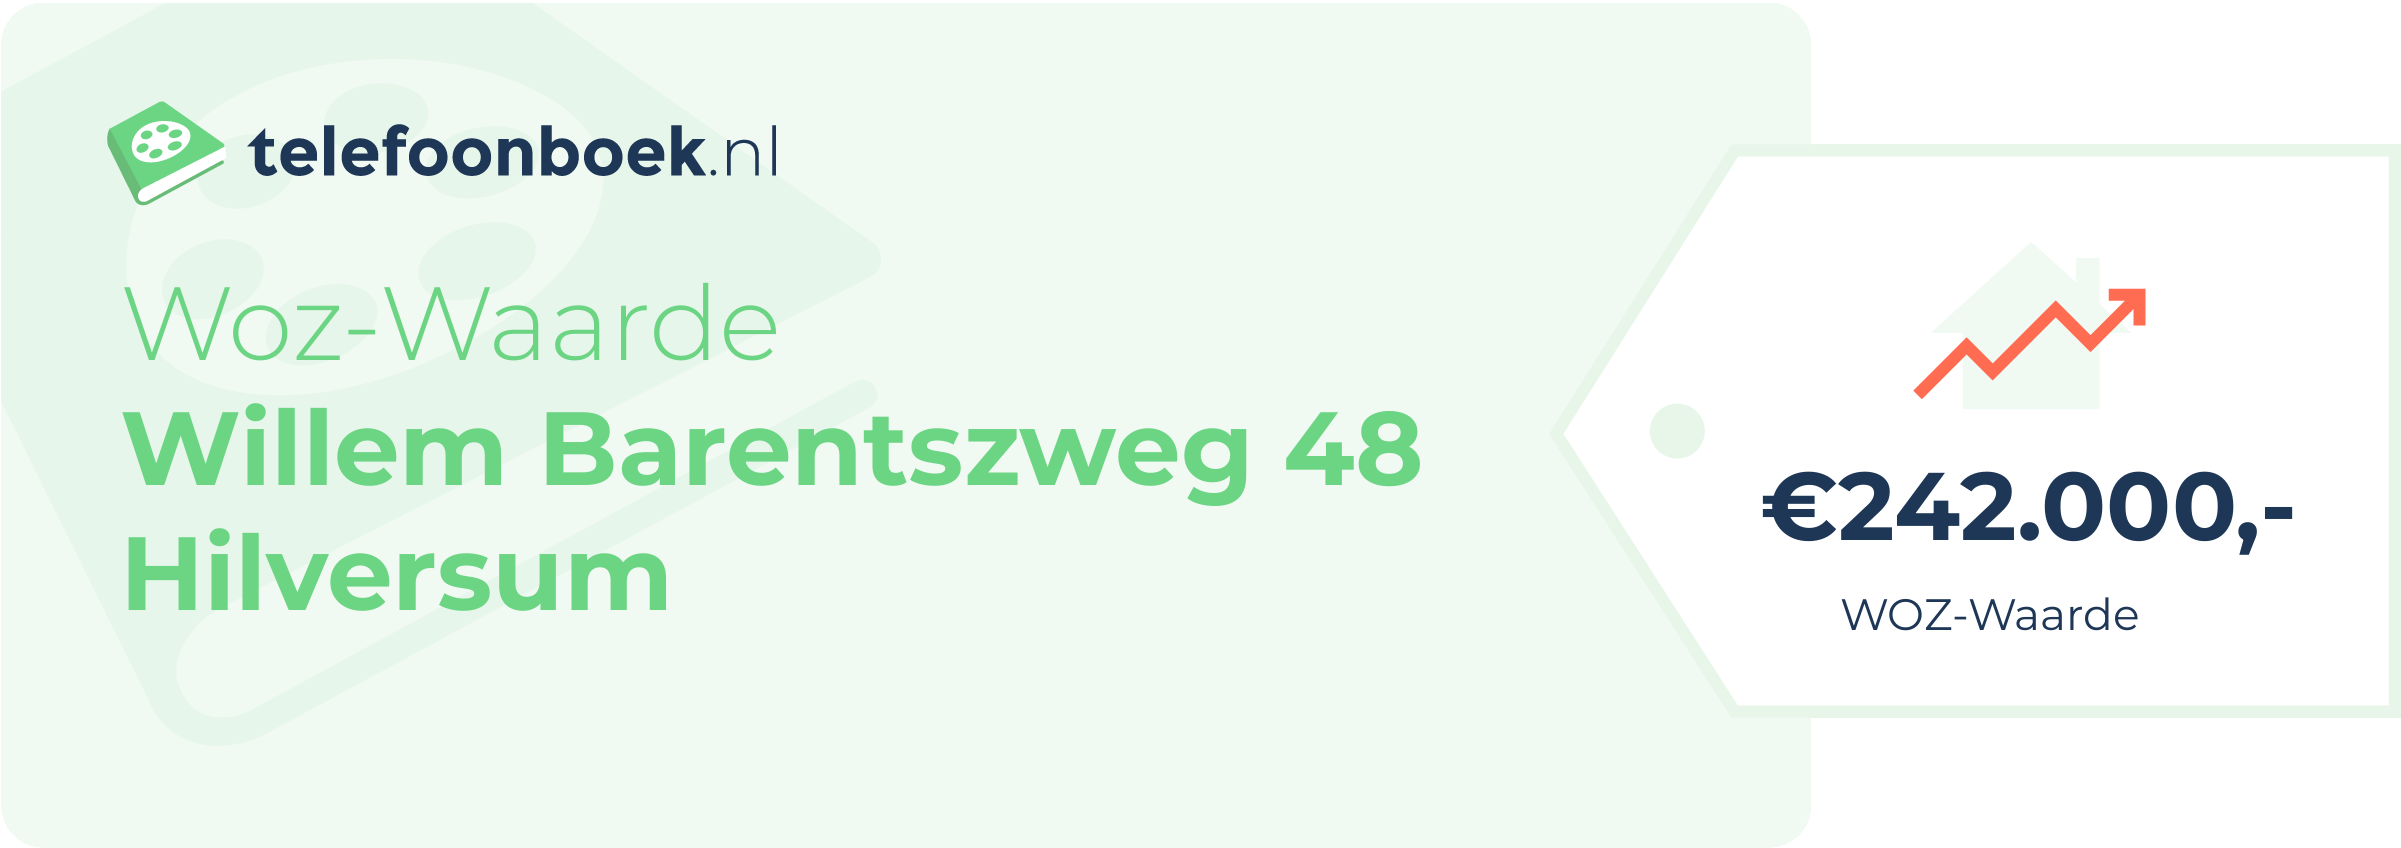 WOZ-waarde Willem Barentszweg 48 Hilversum